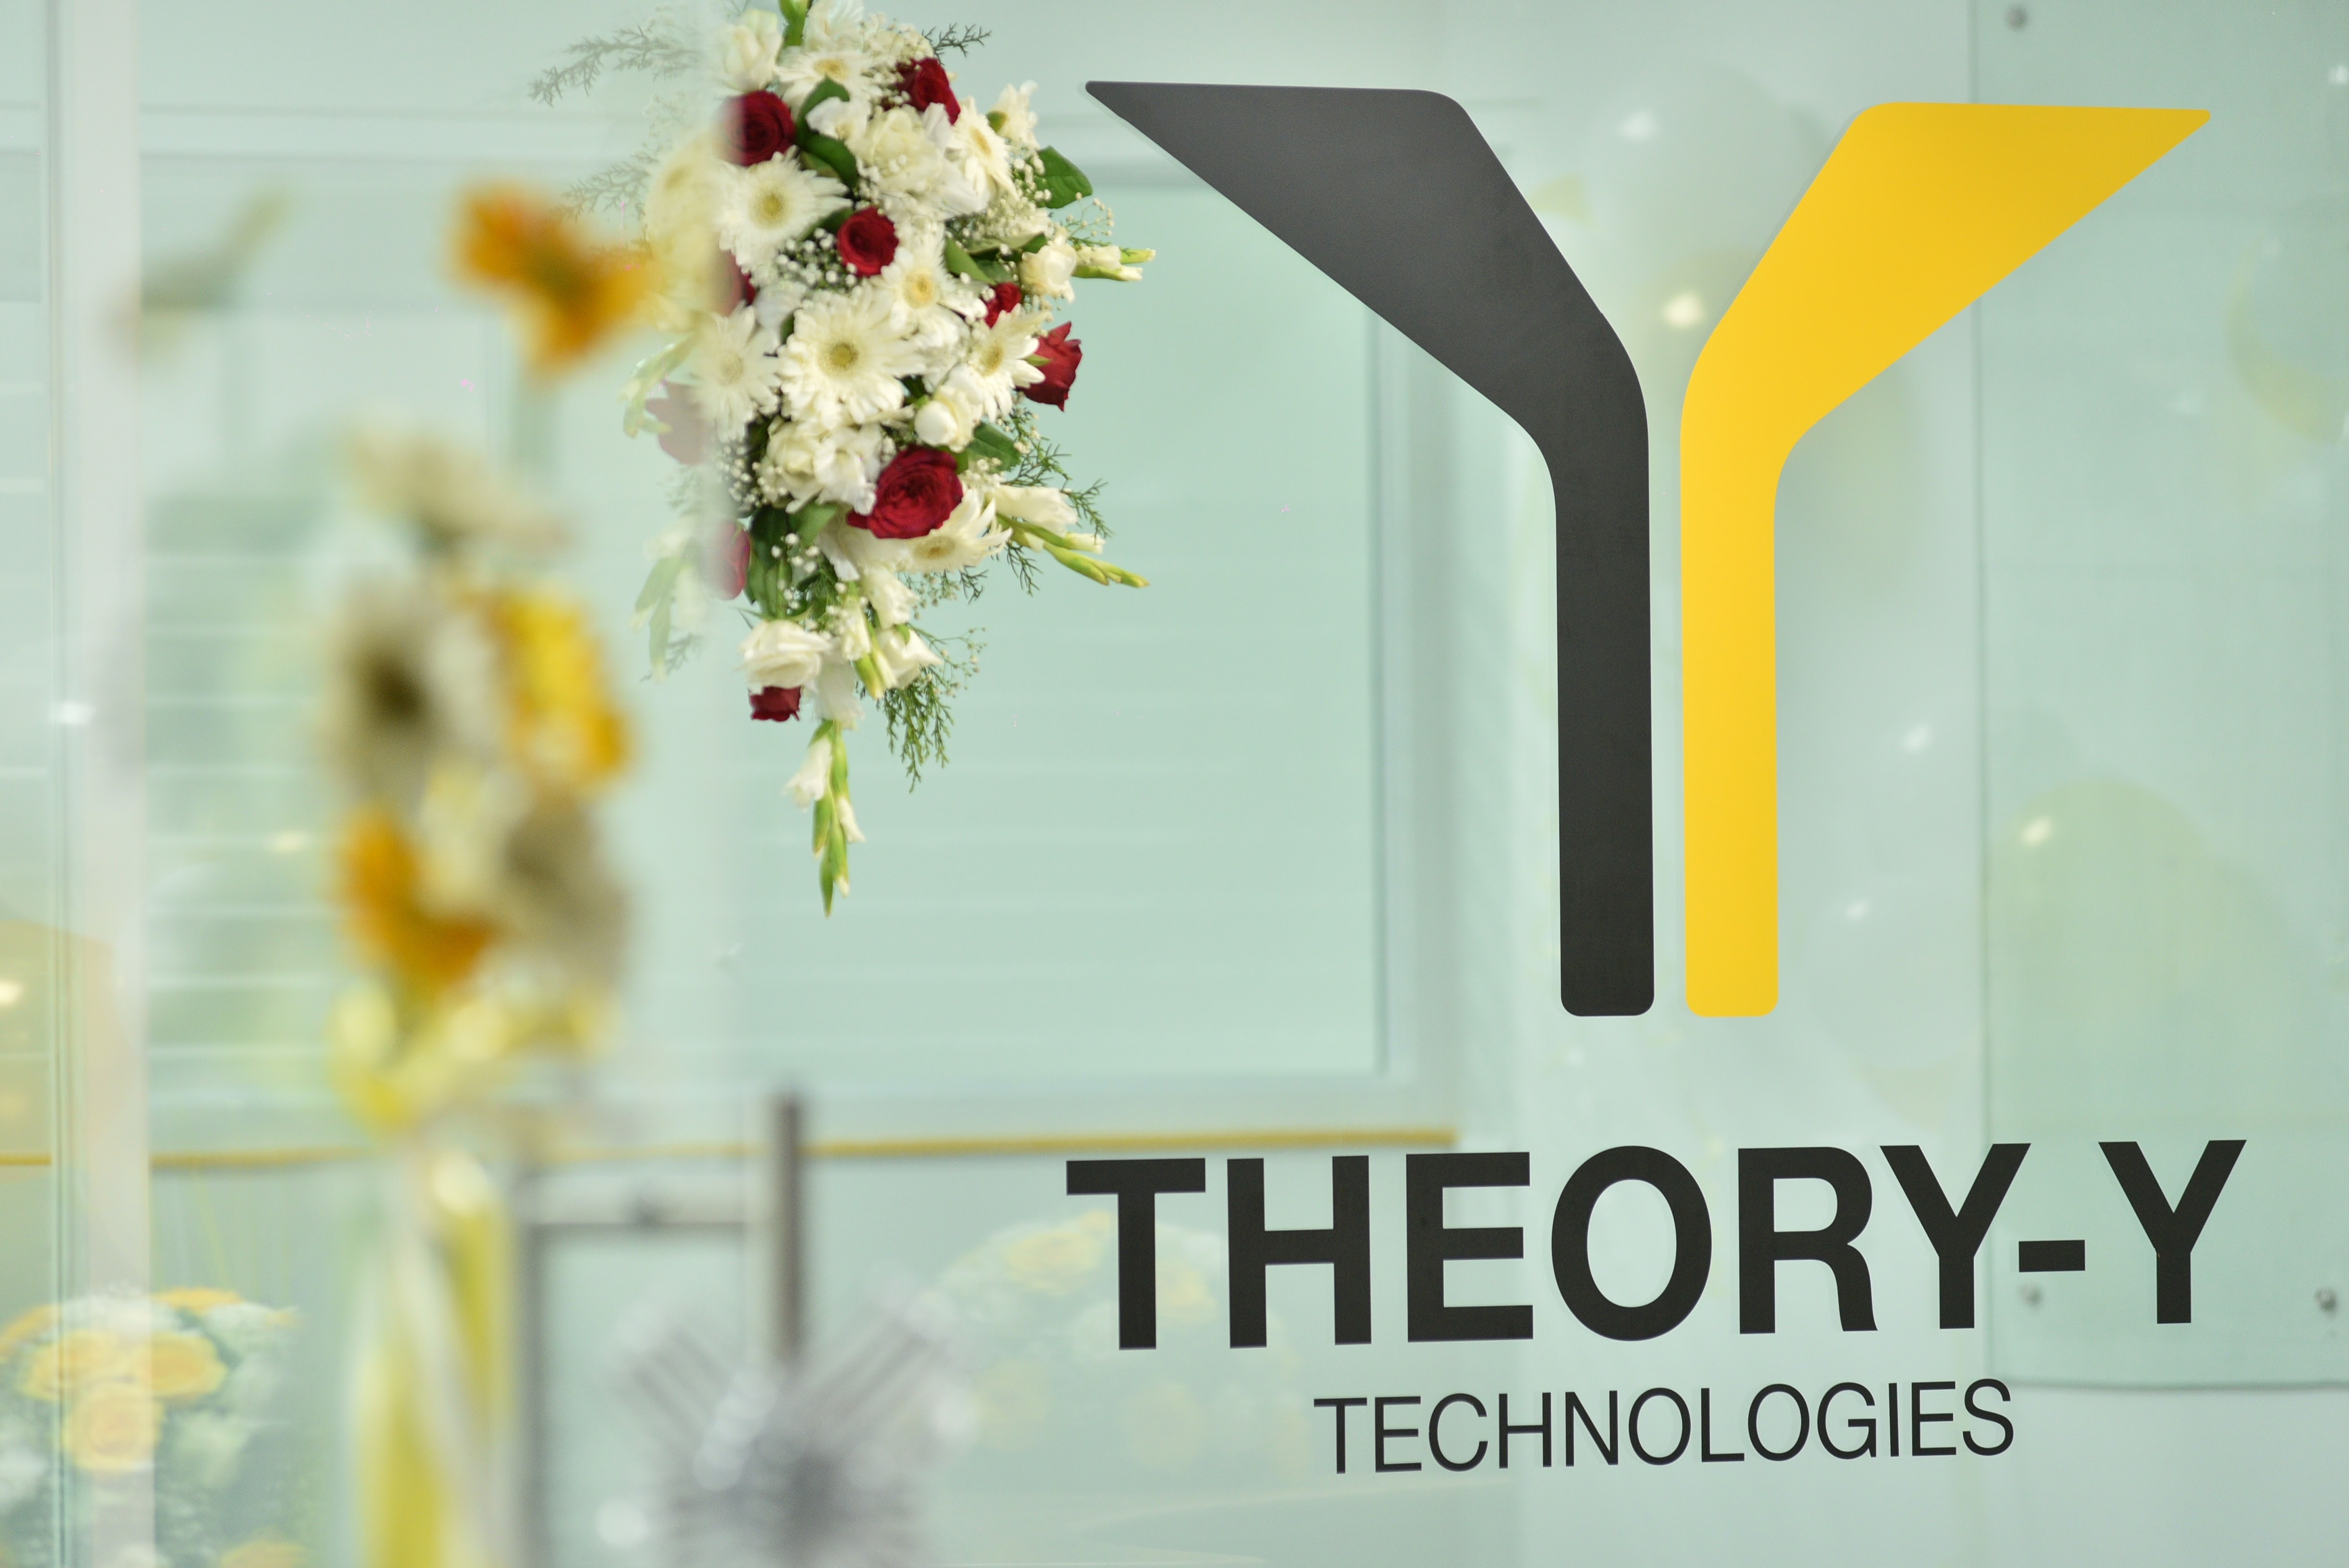 Theory Y Technologies logo